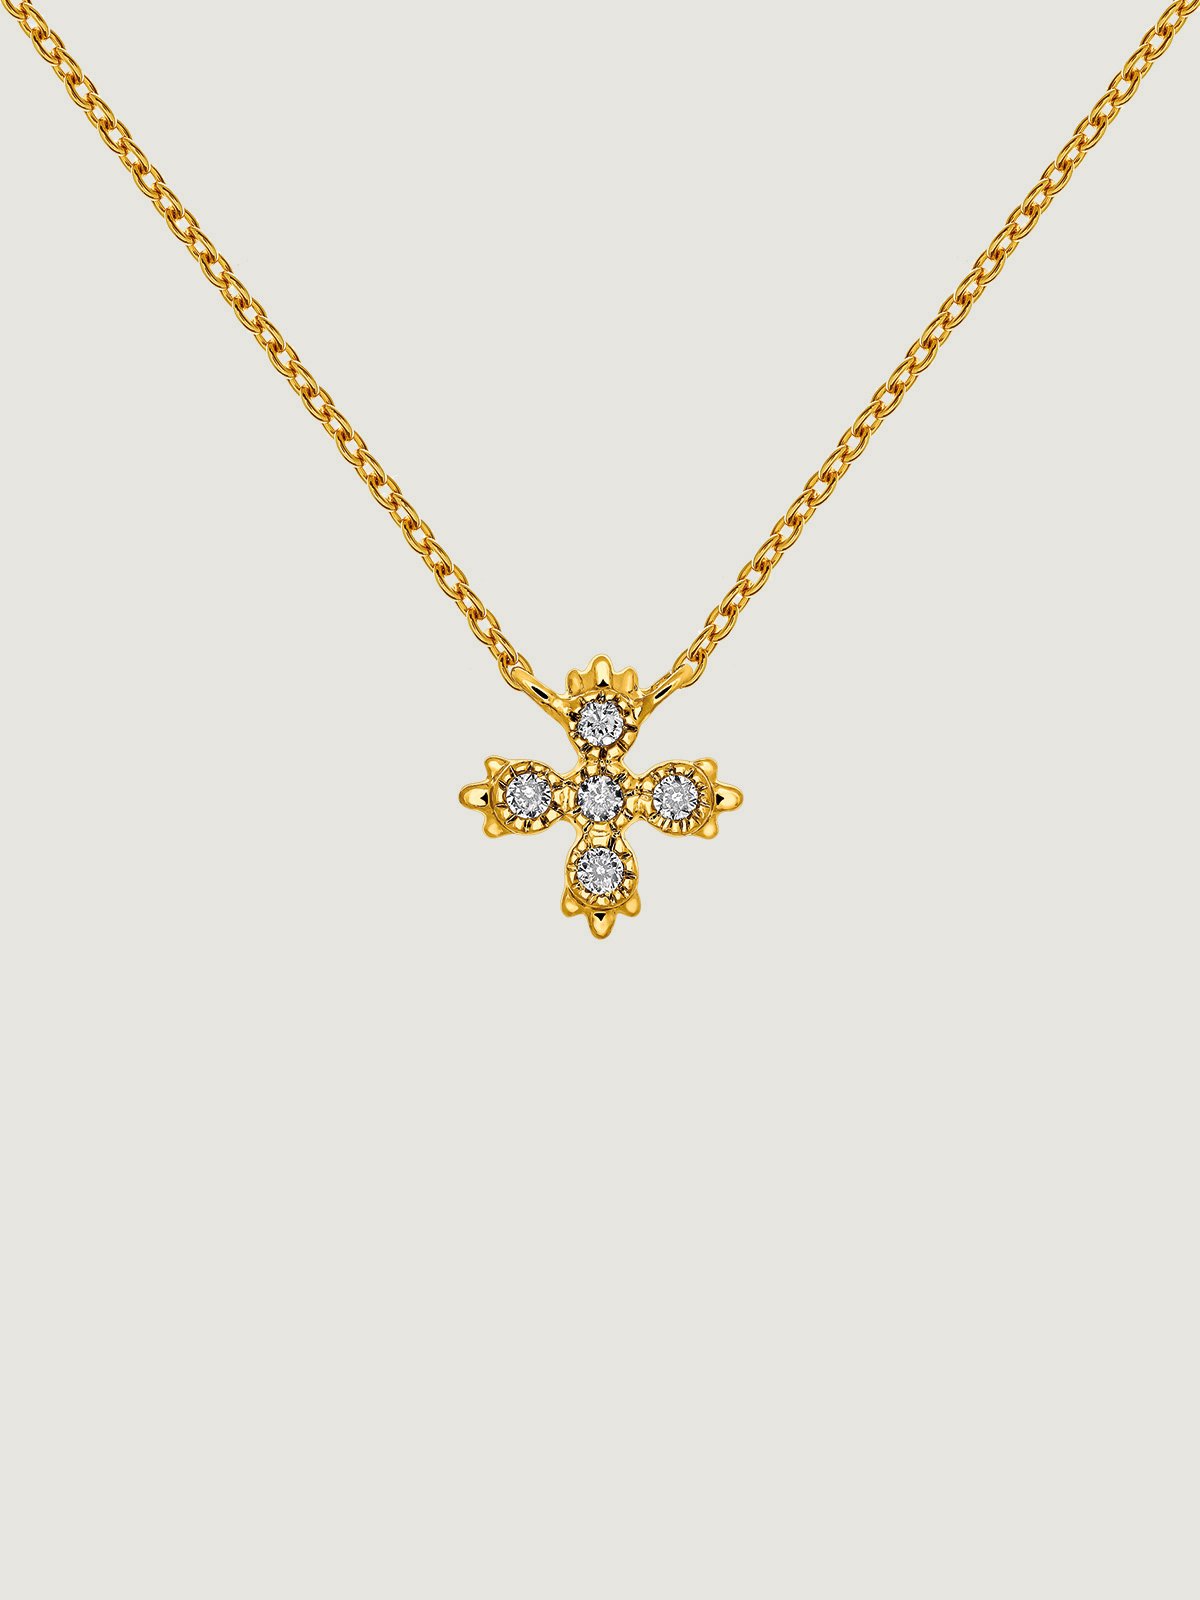 Pendentif en or jaune 18K avec croix de diamants